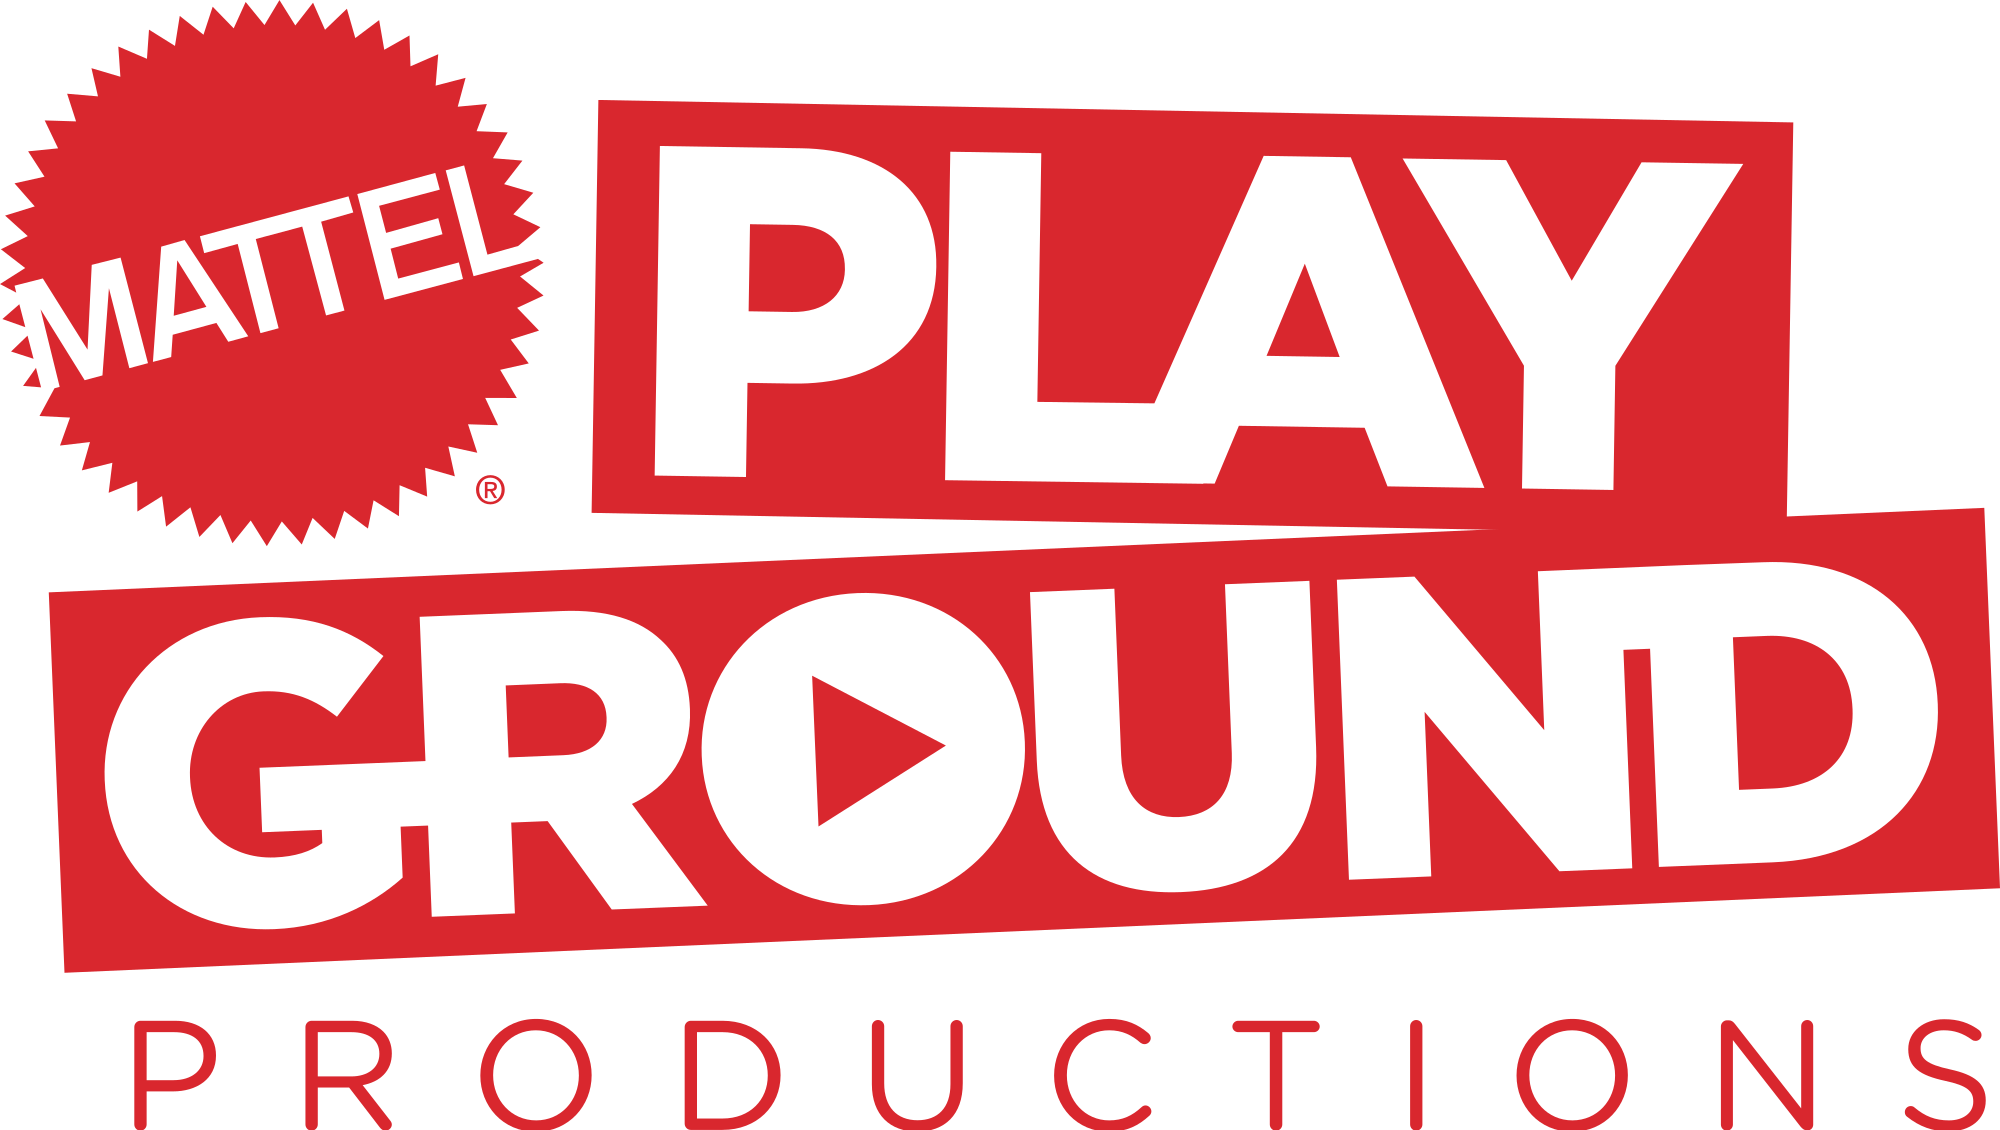 Mattel Playground Productions - company